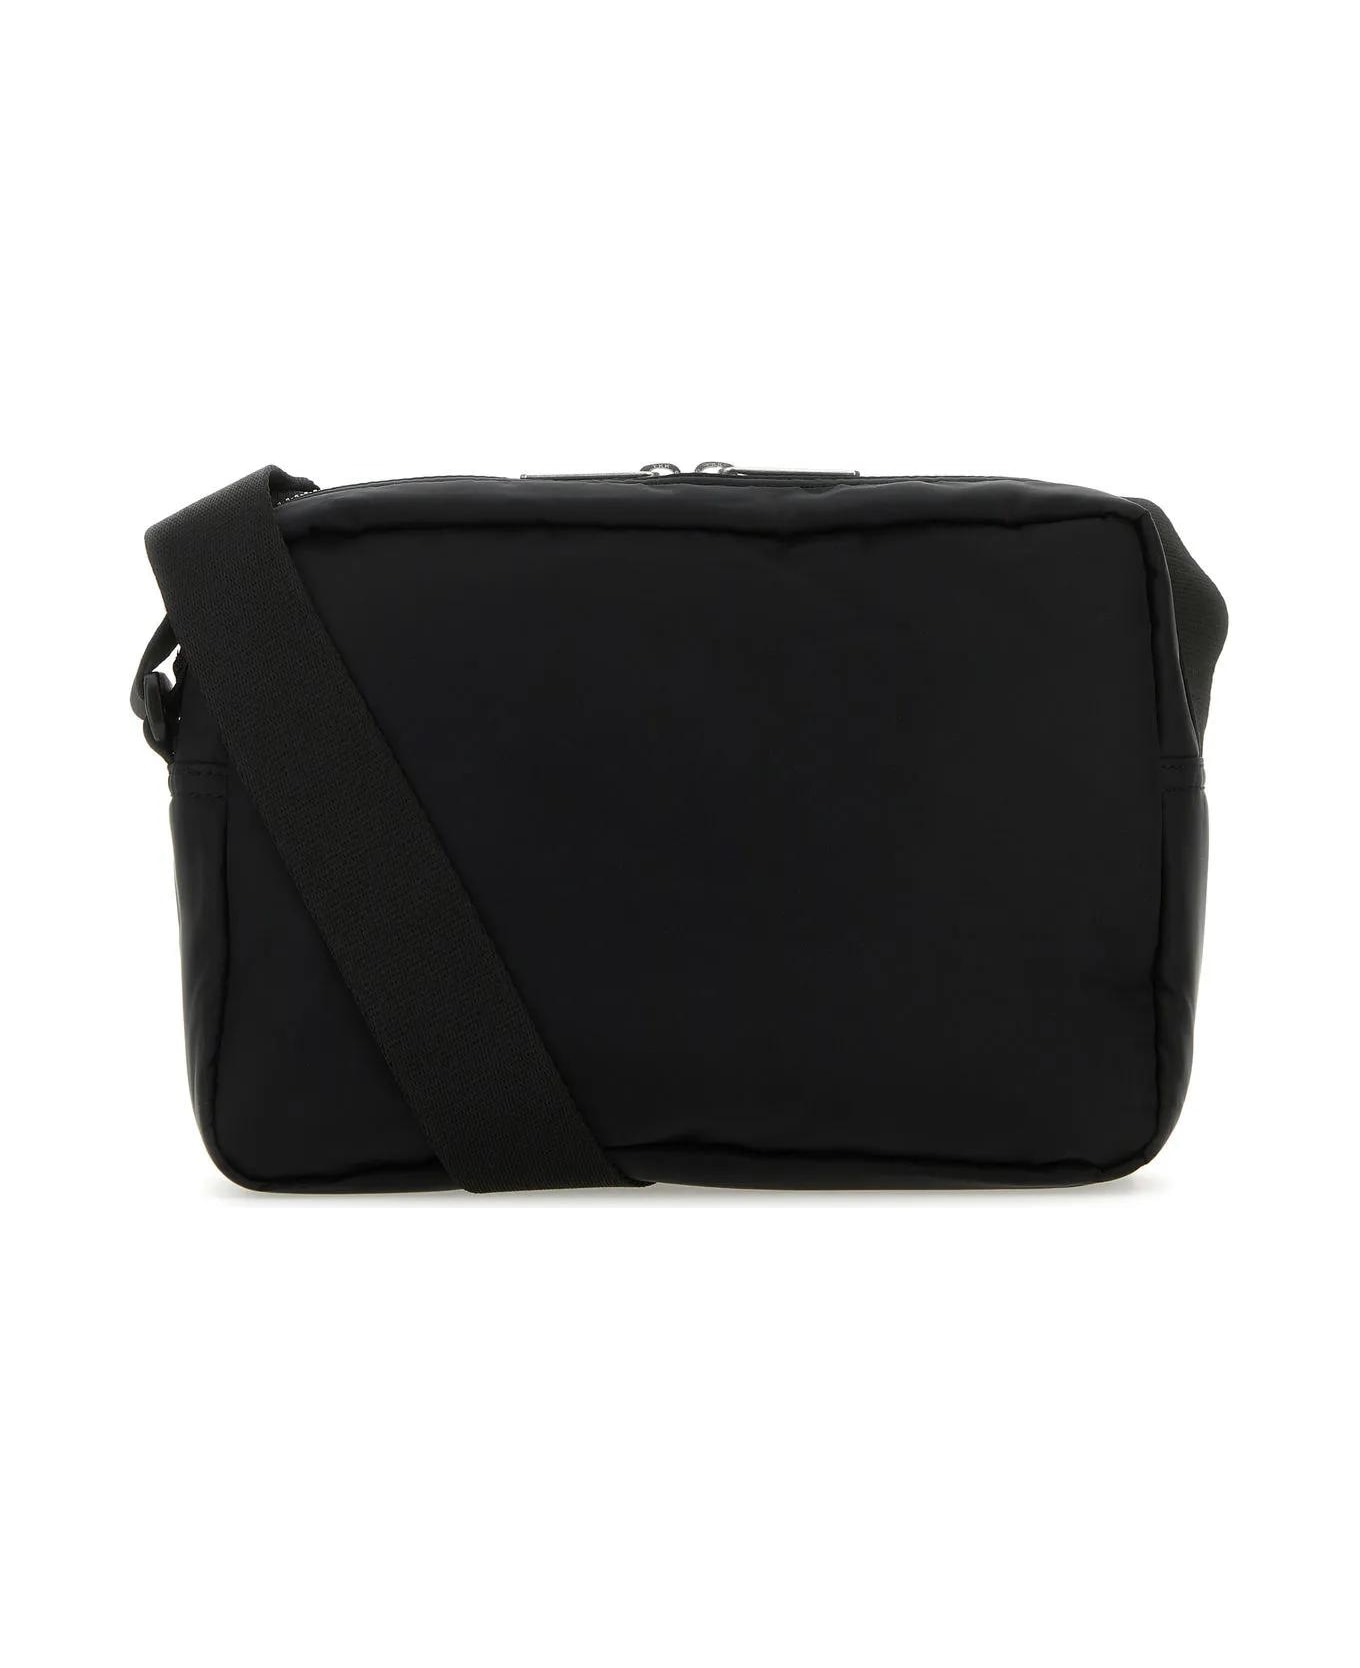 Carhartt Black Fabric Otley Shoulder Bag - Nero